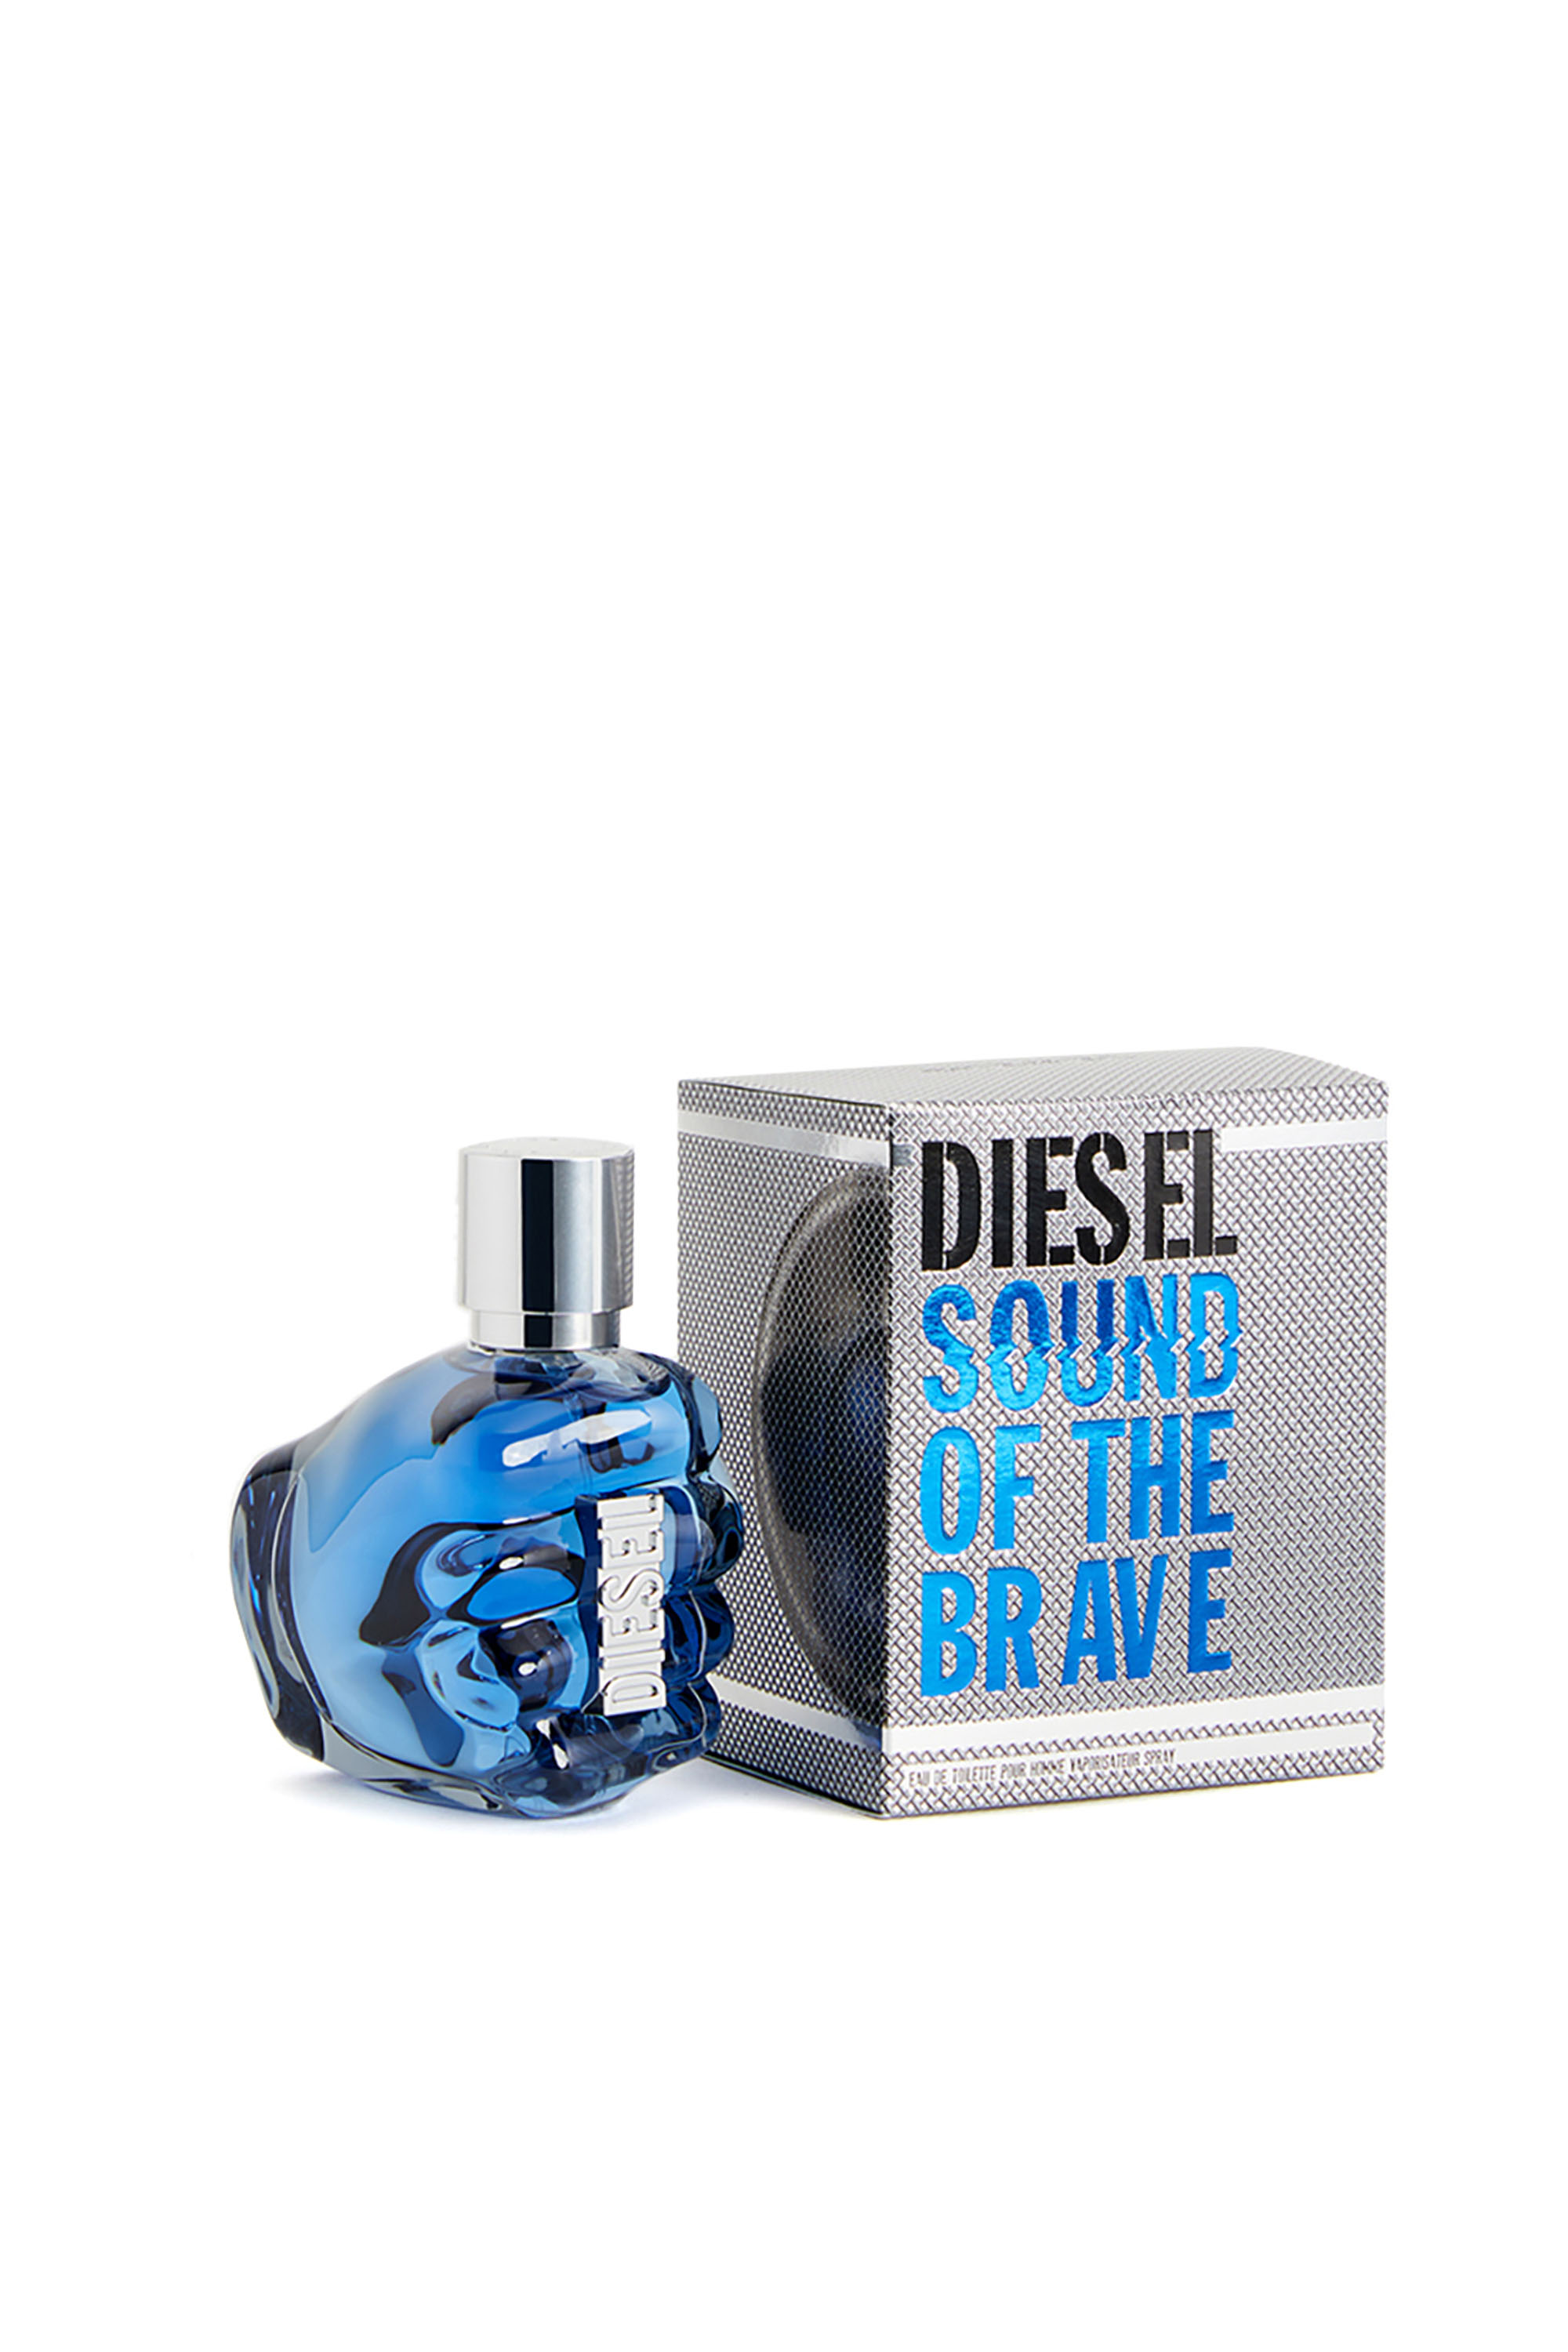 Diesel - SOUND OF THE BRAVE 35ML, Azul - Image 2